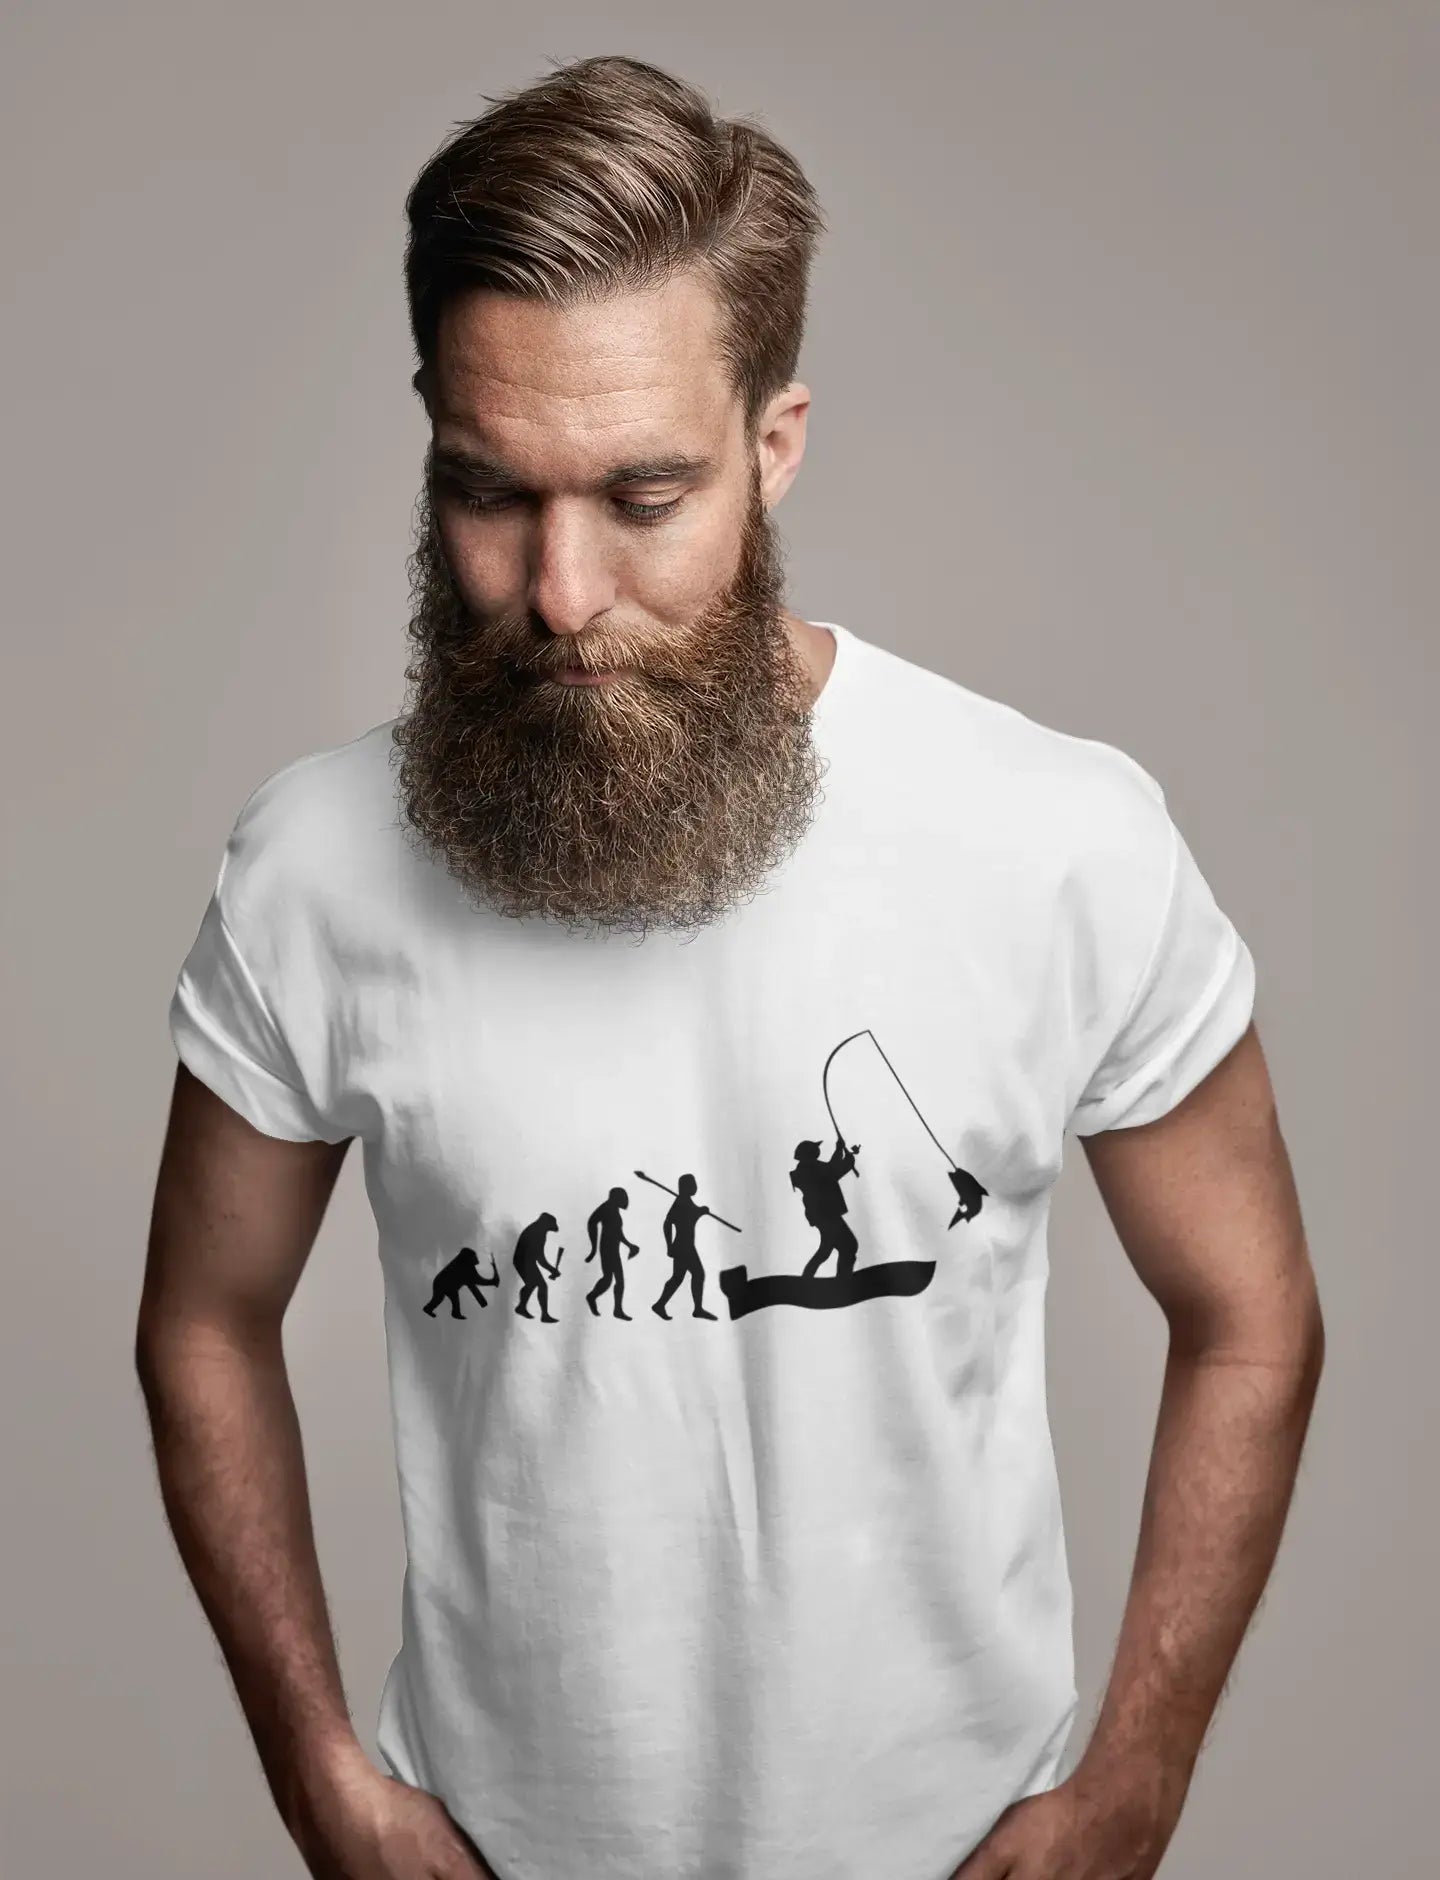 ULTRABASIC - Graphic Printed Men's Evolution of the Fishing Boat T-Shirt Navy